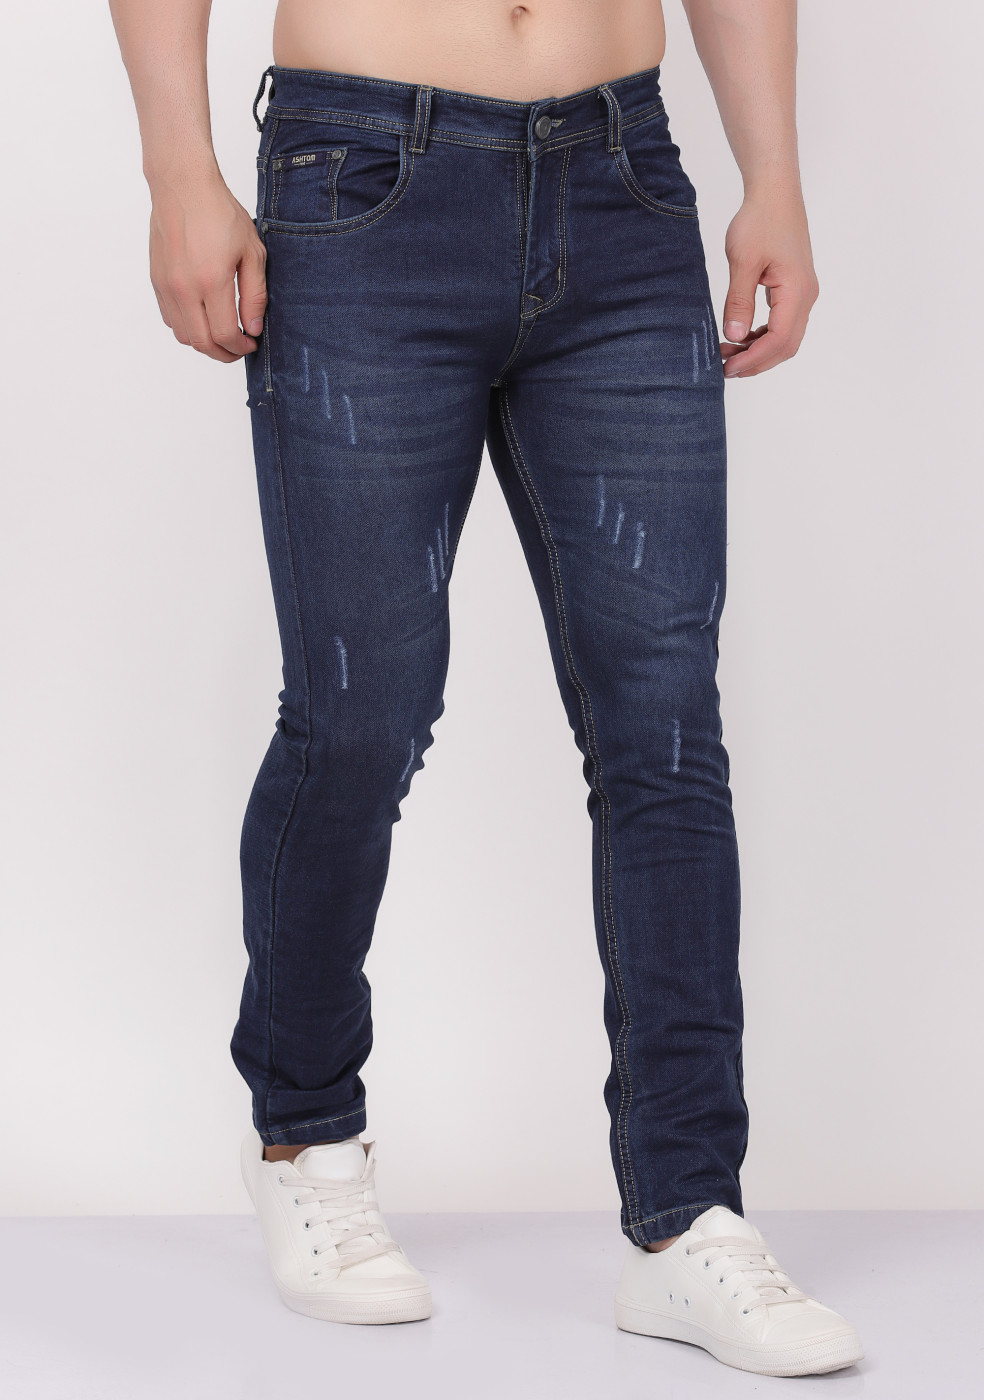 Buy Raj Garments Denim Damage Jeans (Set 1) (PCS 10) at Amazon.in